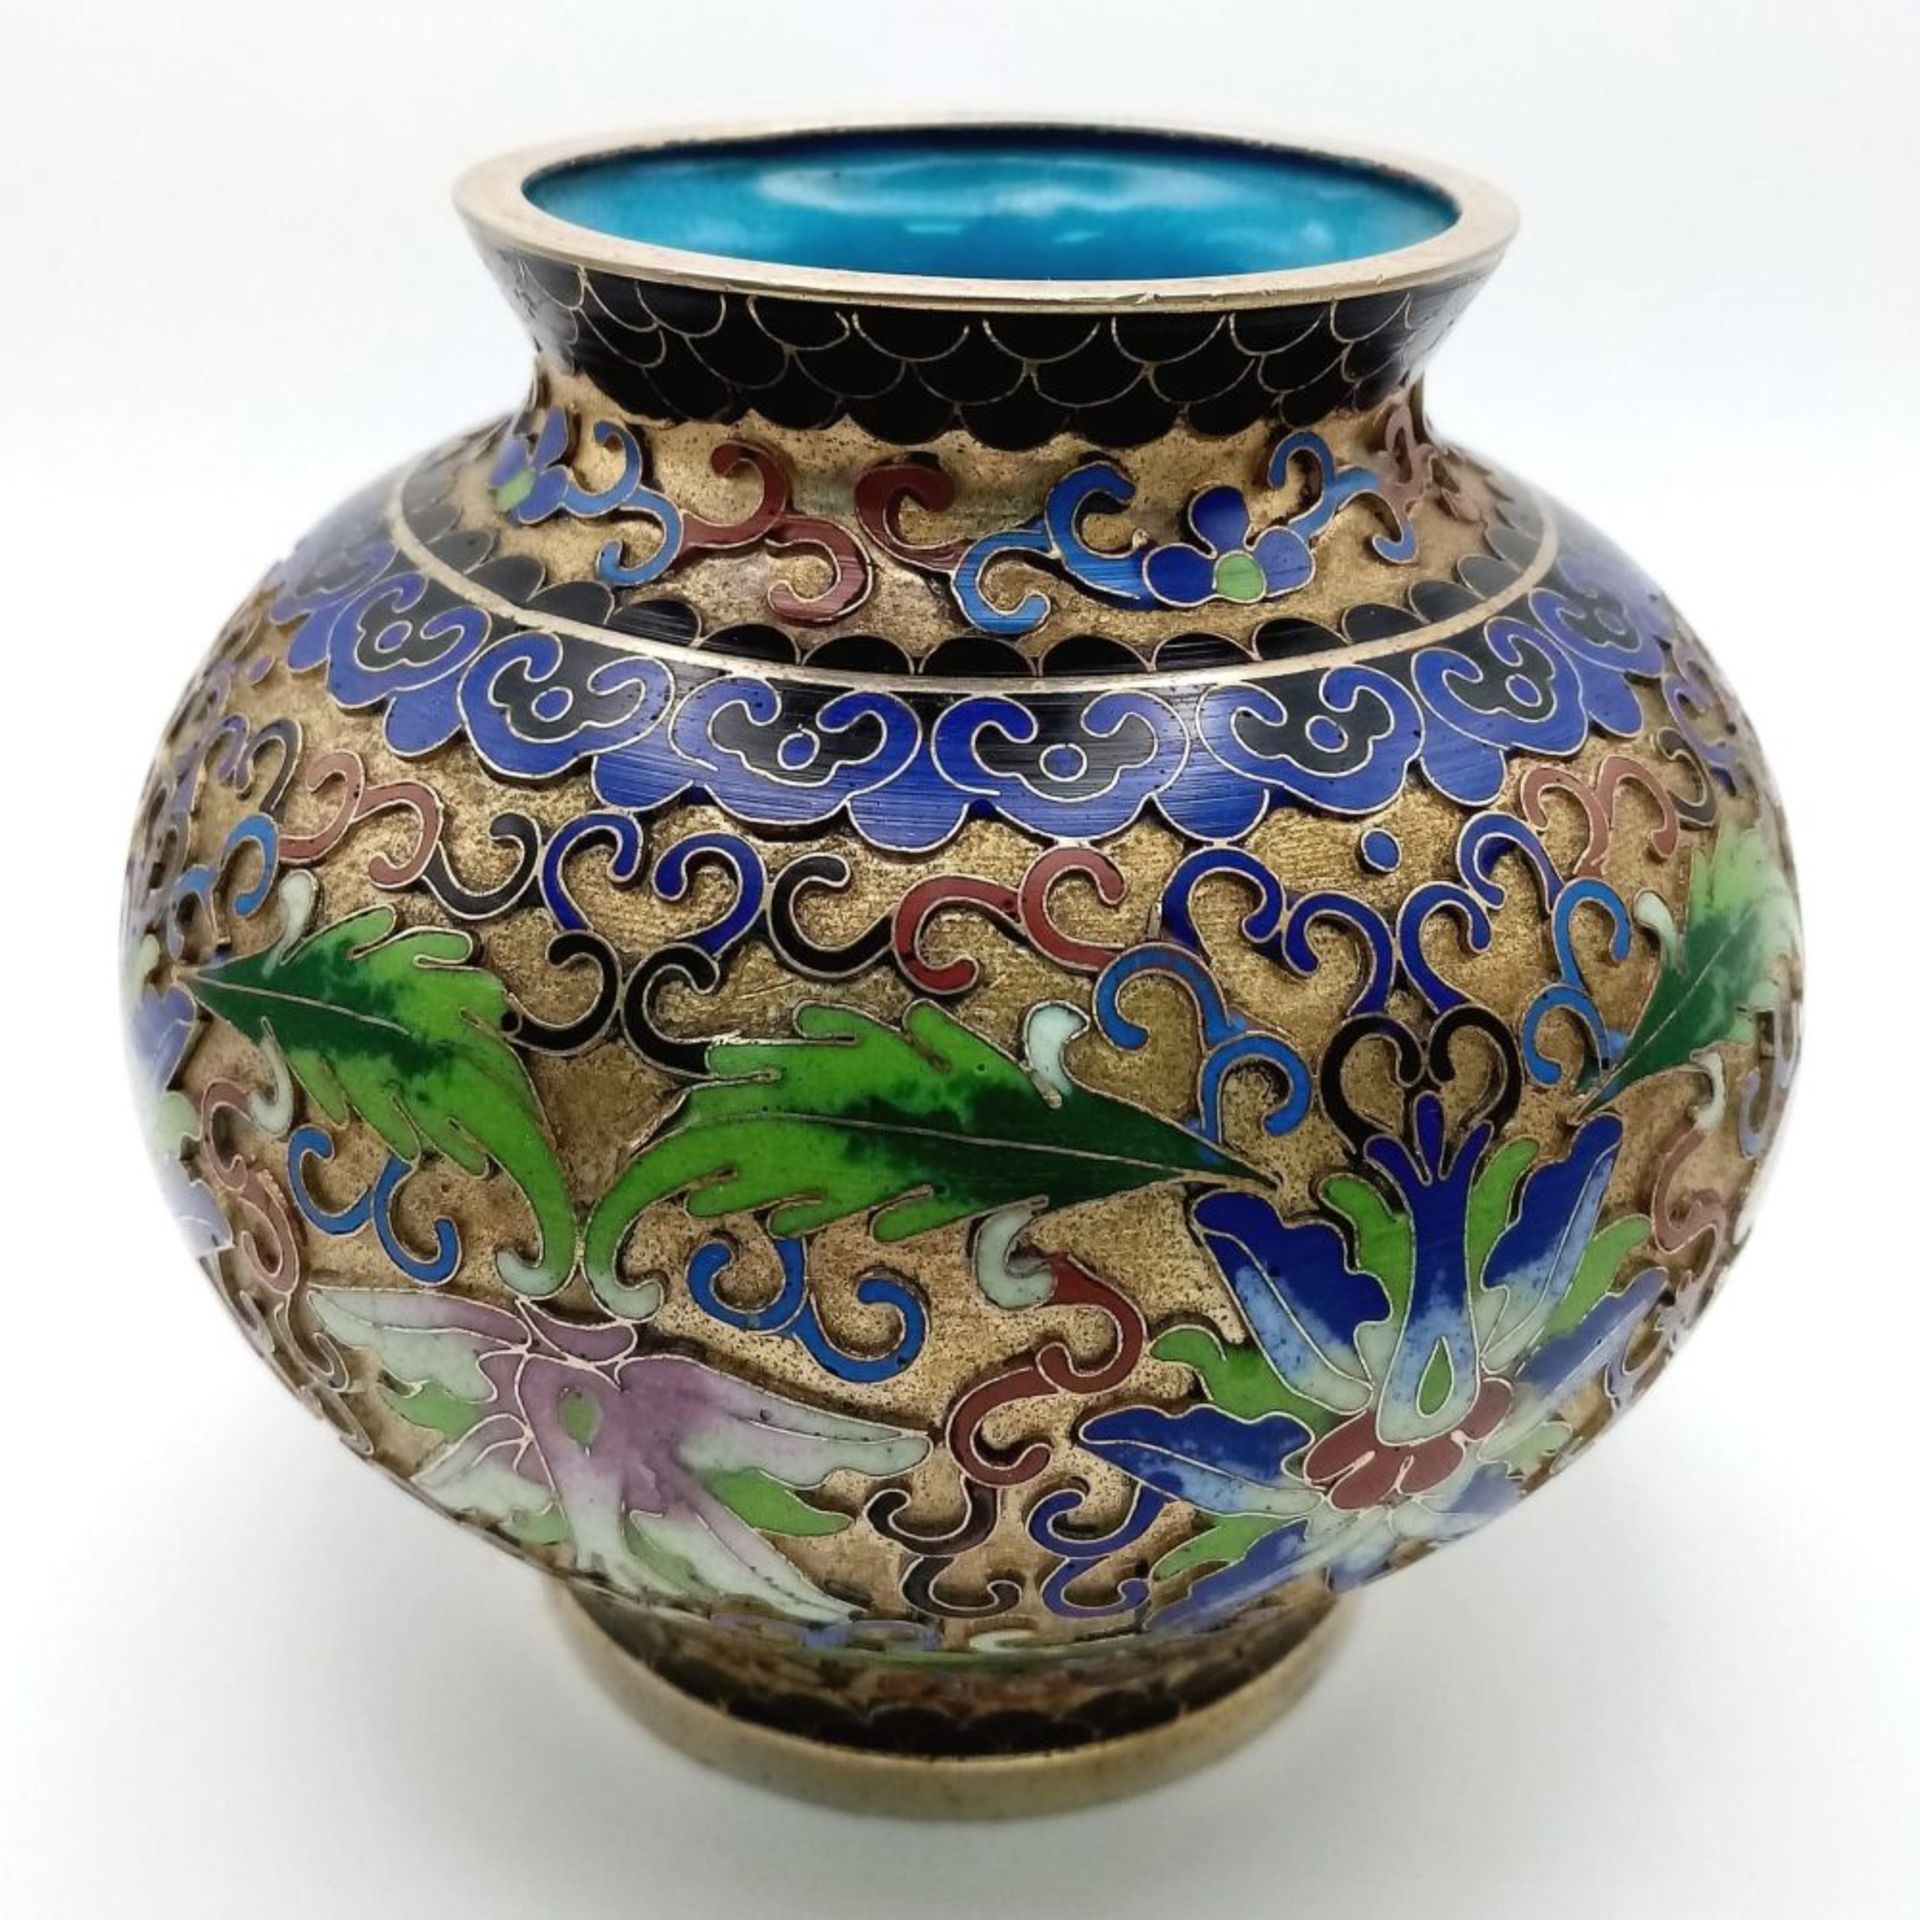 Stunning vintage Chinese Cloisonné Enamel Circular Pot. Wonderful floral decoration against a gold - Image 2 of 5